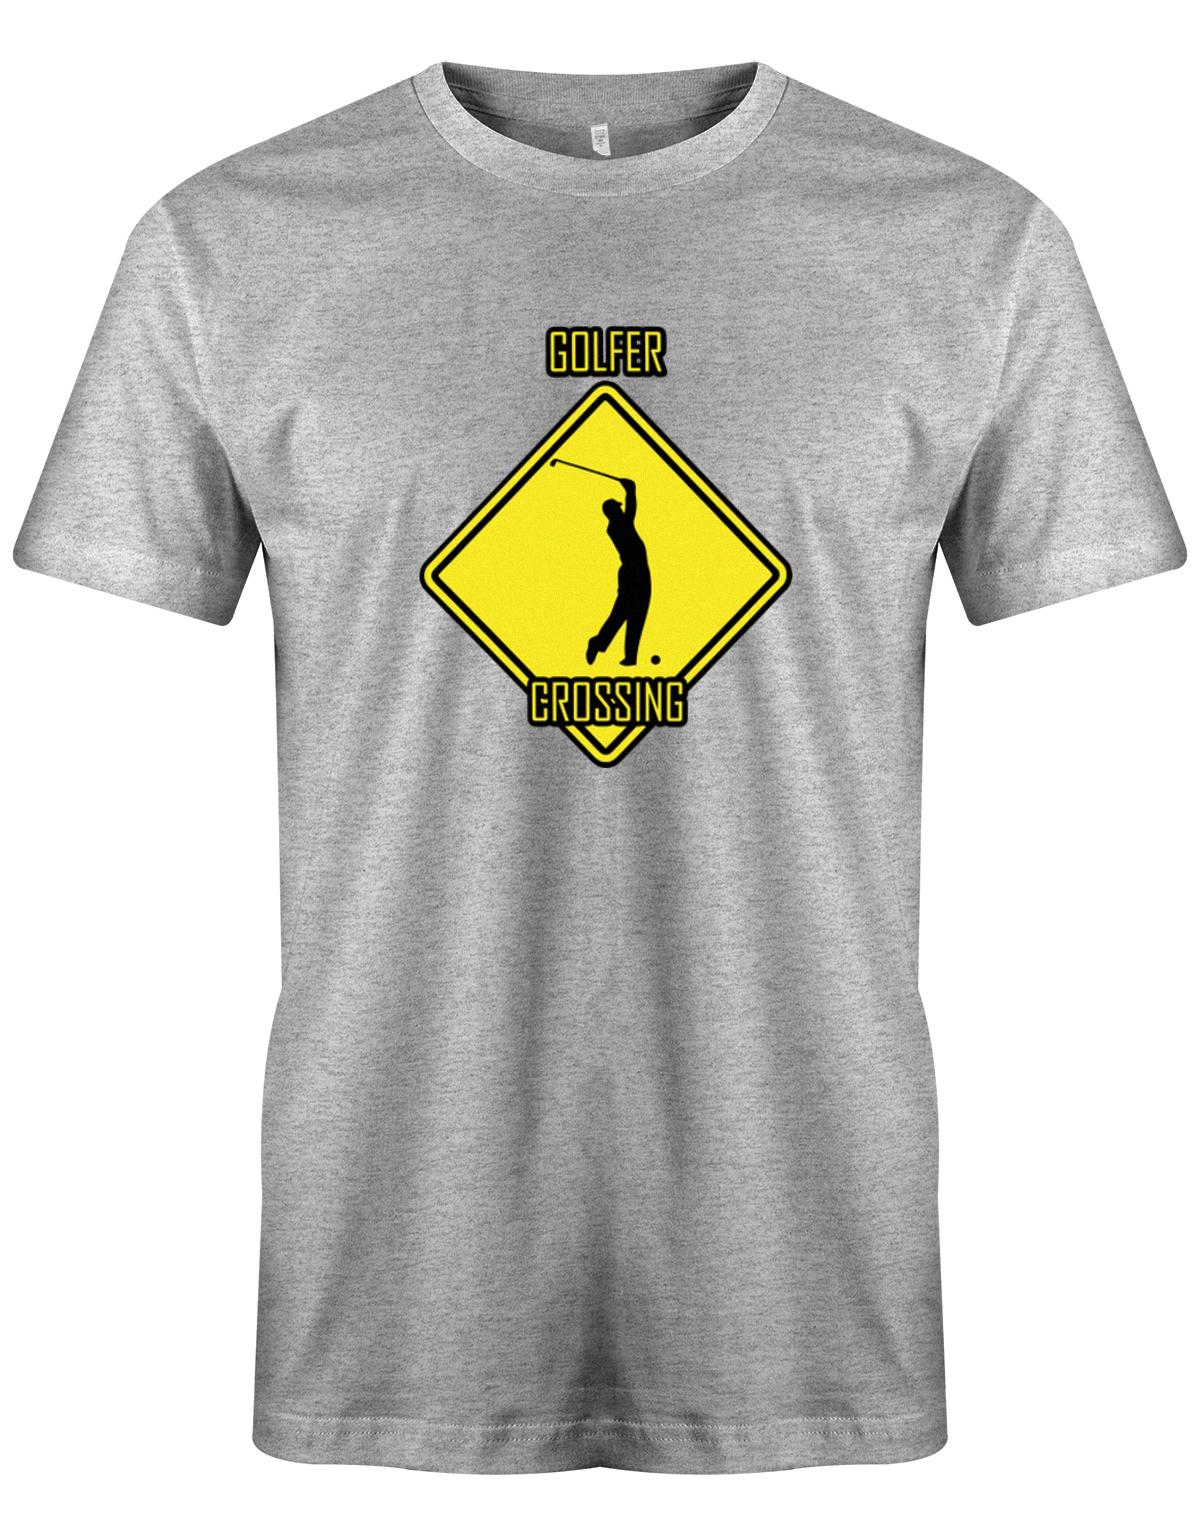 Golfer-Crossing-Herren-Shirt-Grau